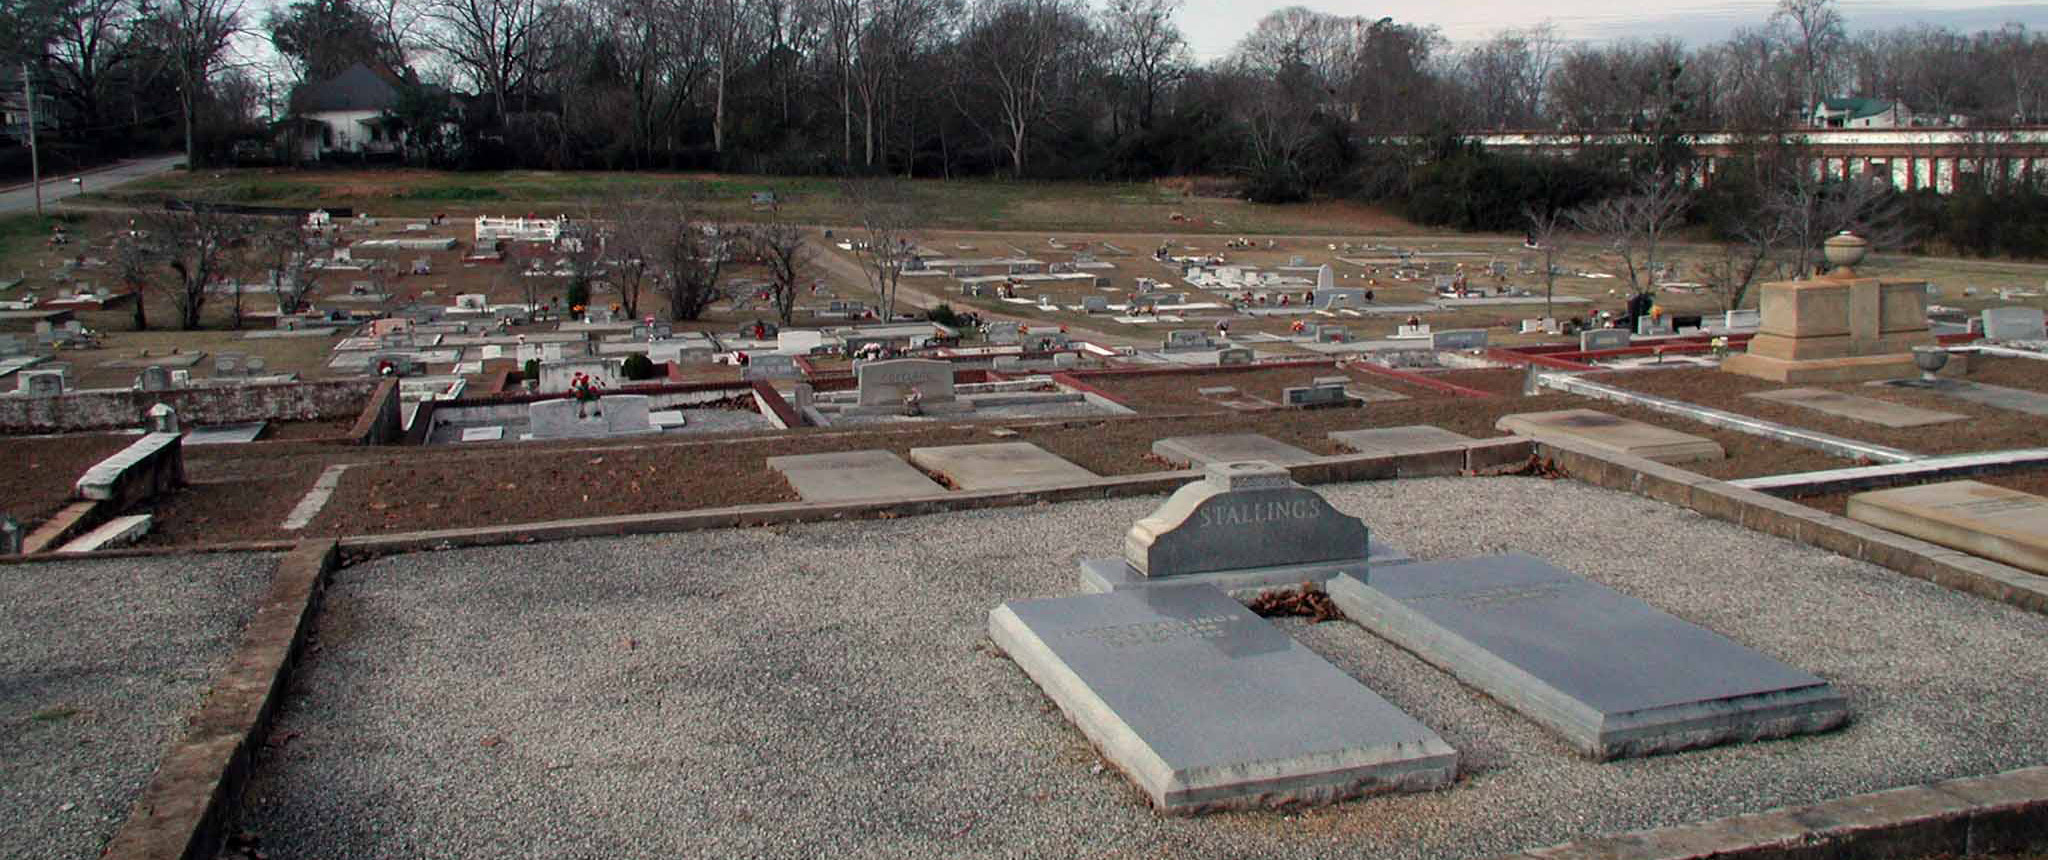 The Walking Dead 4ª Temporada: Confirmadas as gravações no cemitério de Grantville